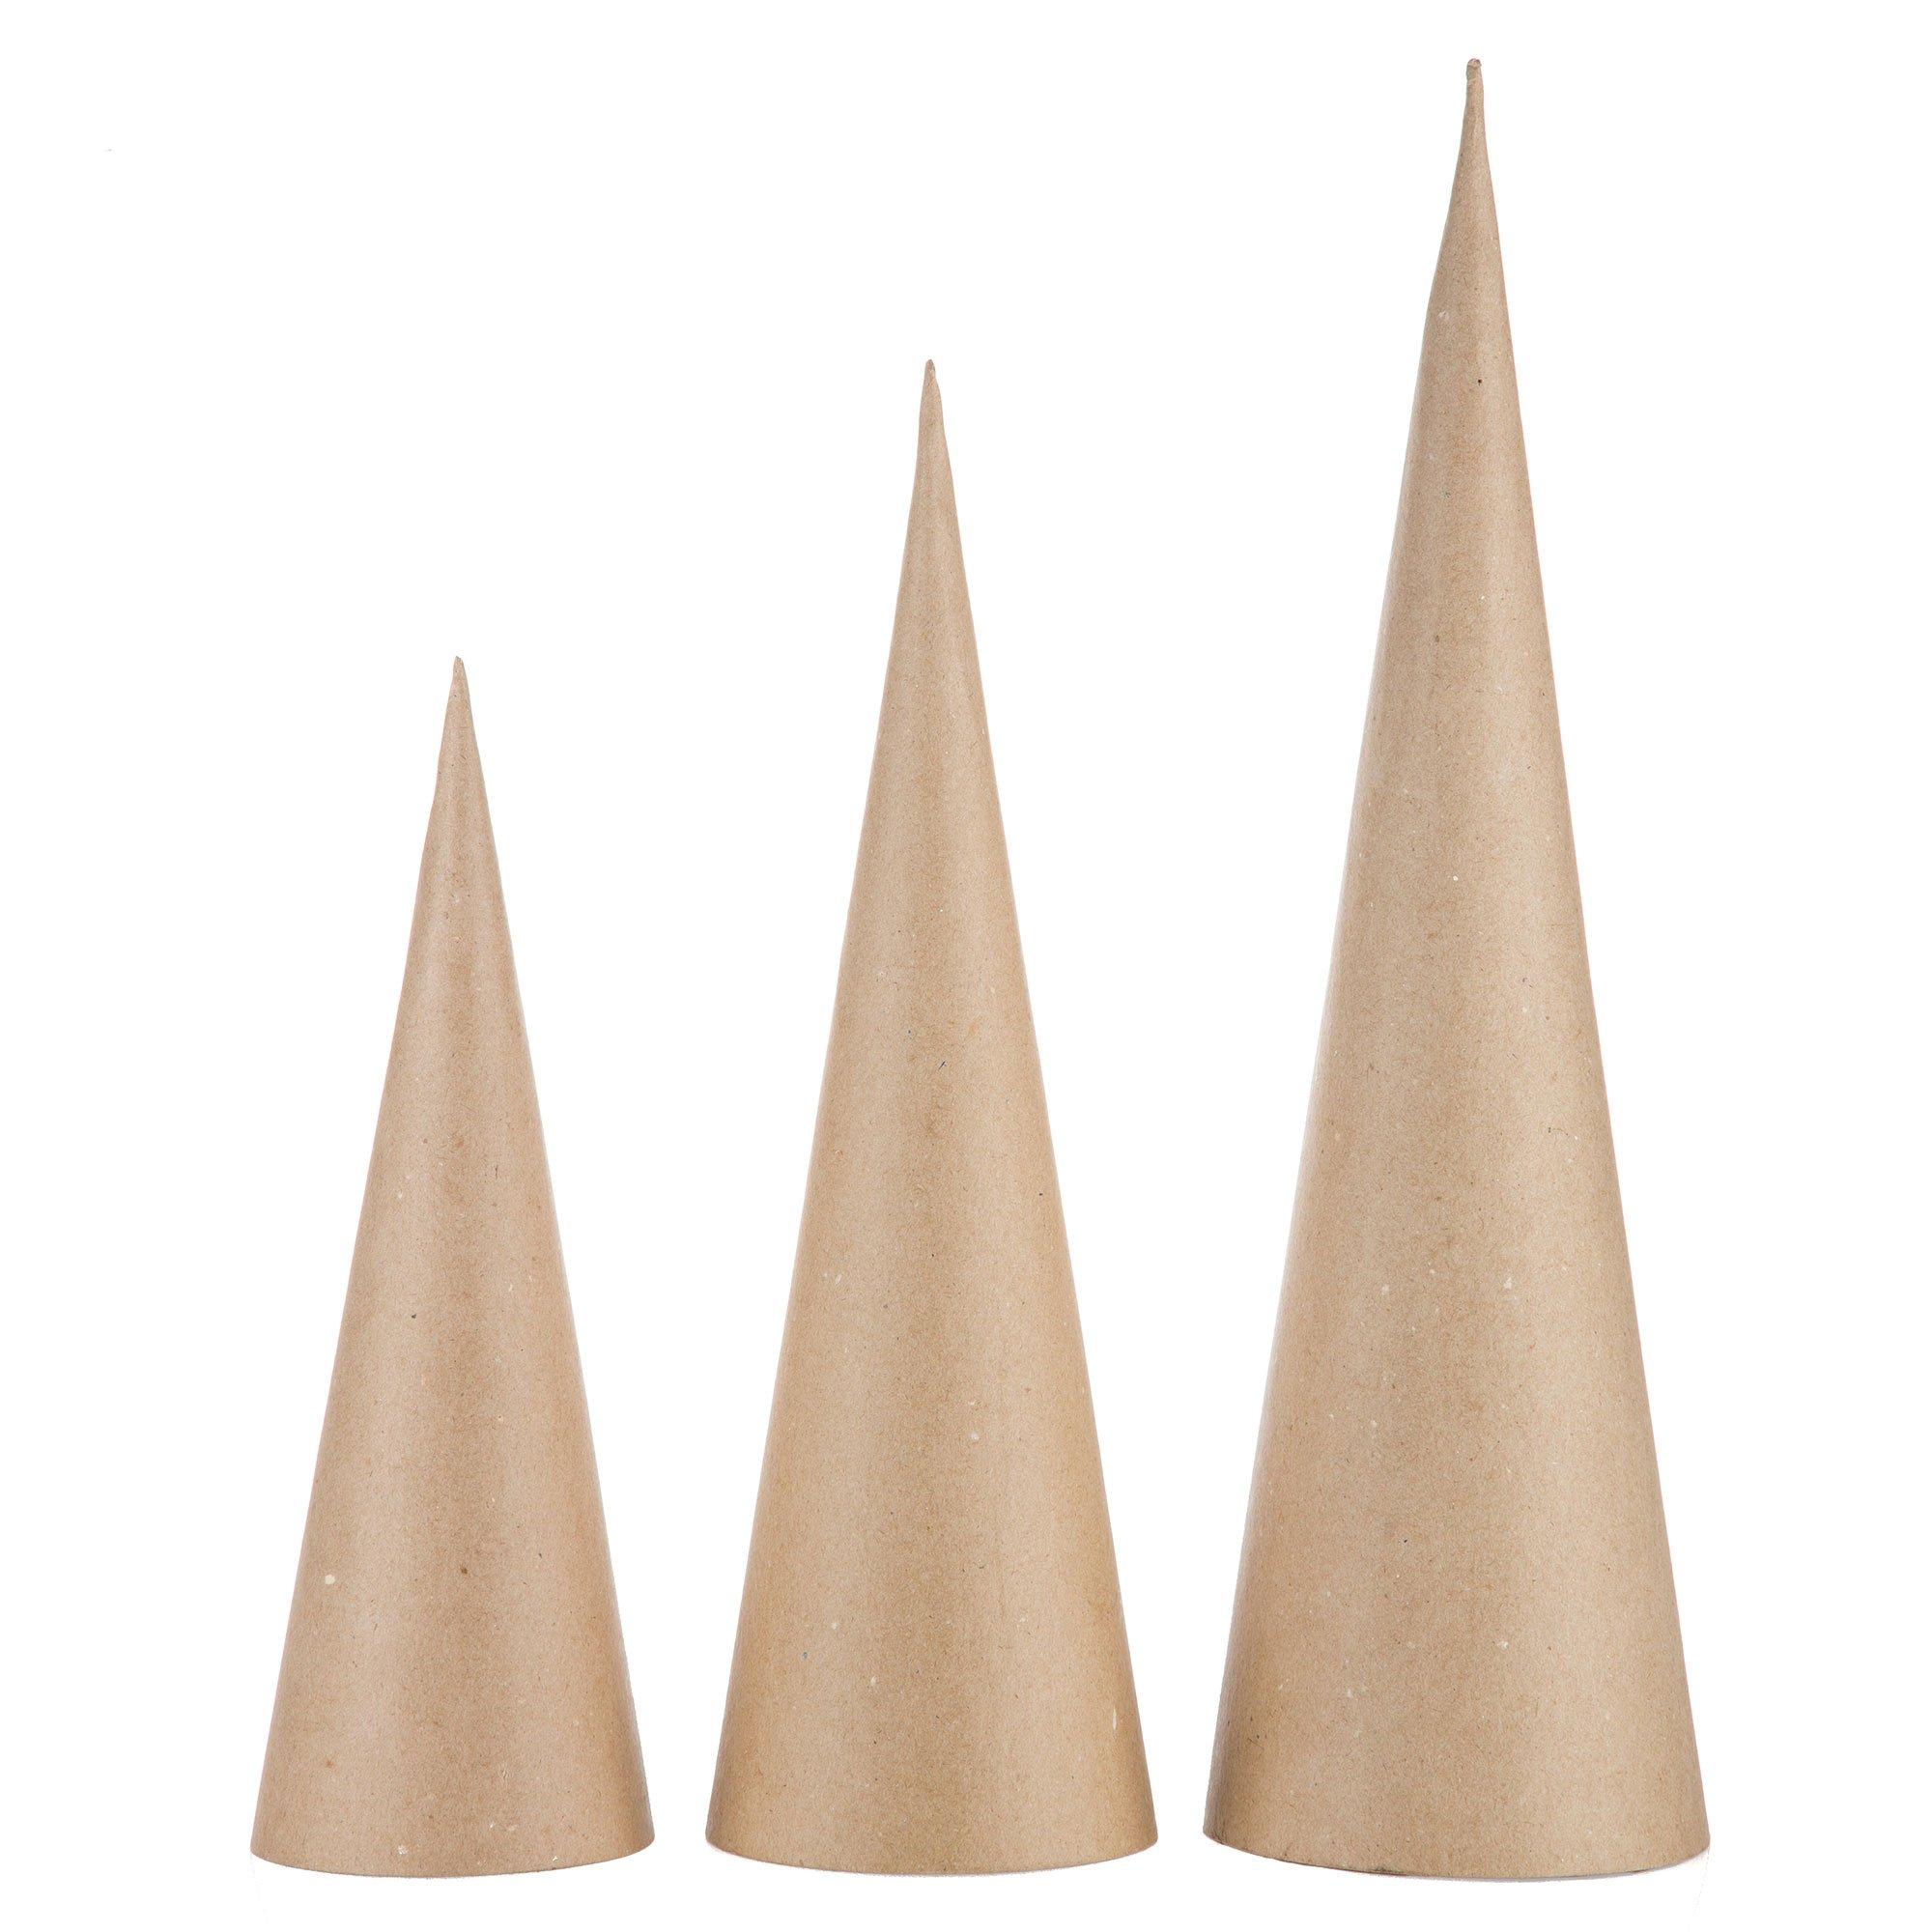 Cardboard Cones - Great for Crafts! - Lot of 60 cones